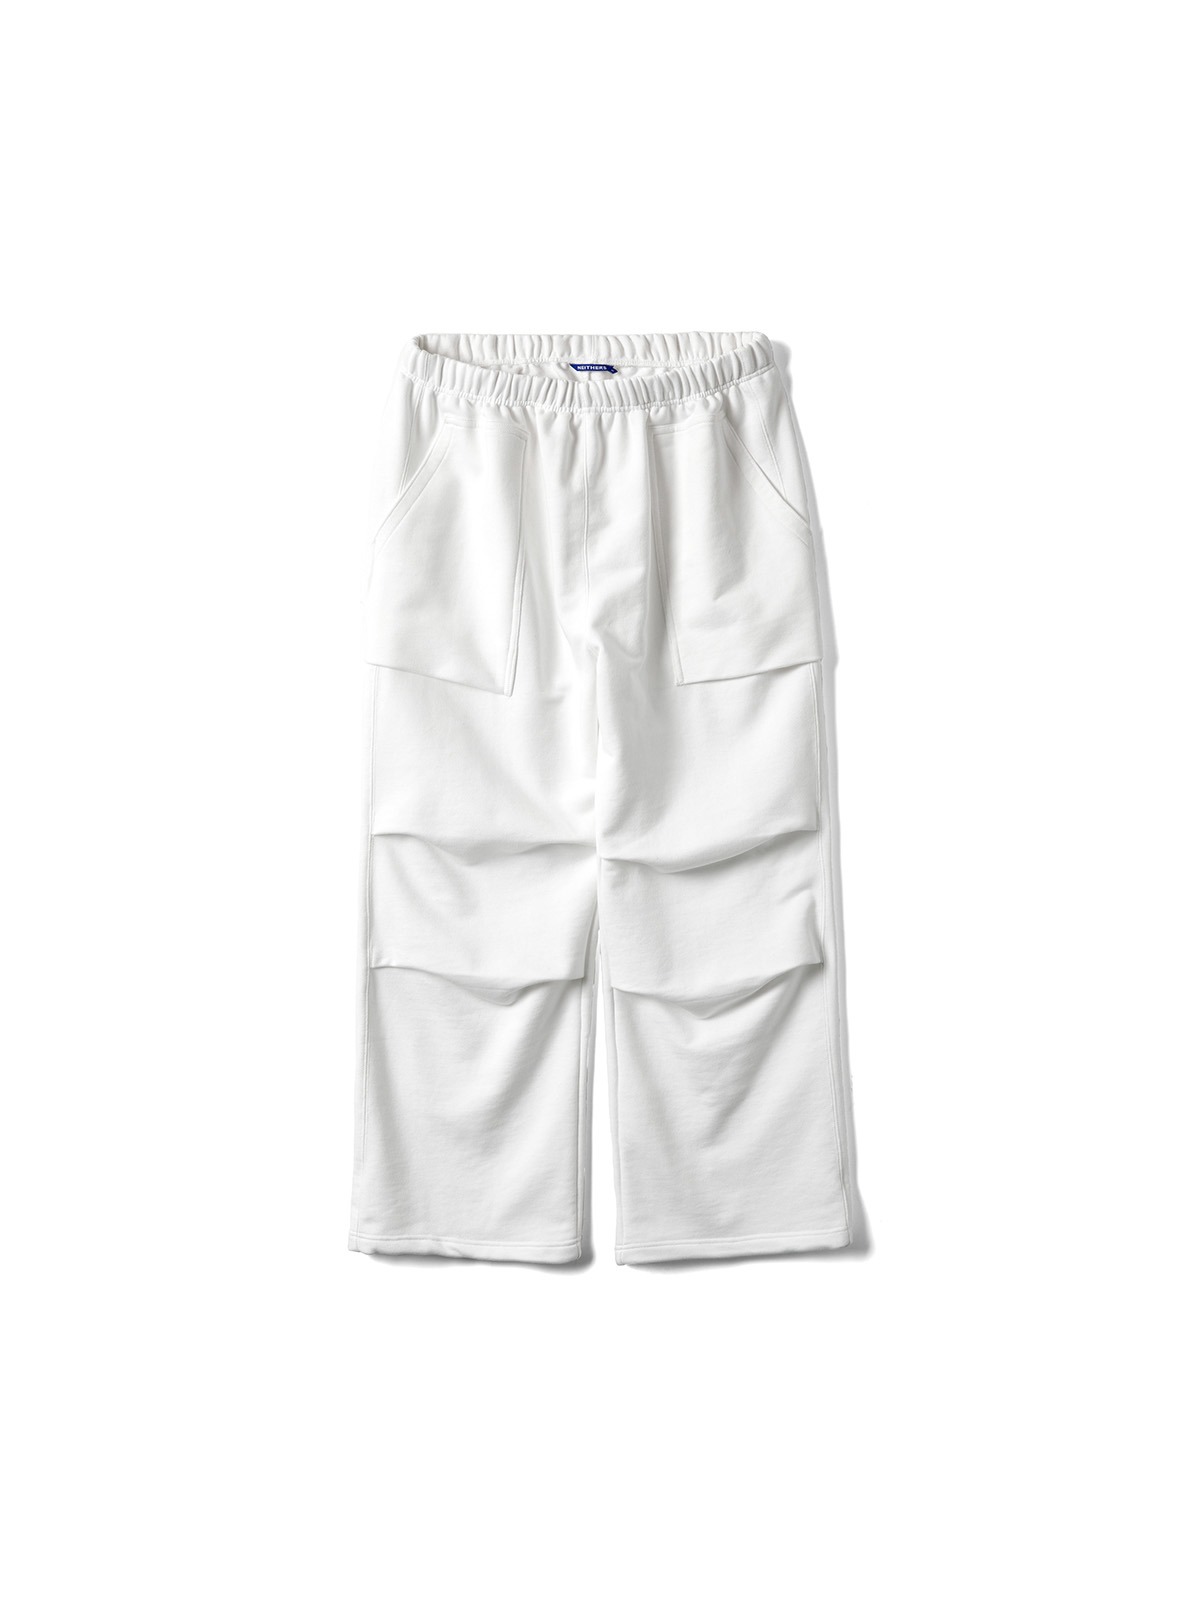 Newsboy Sweatpants (Off White)